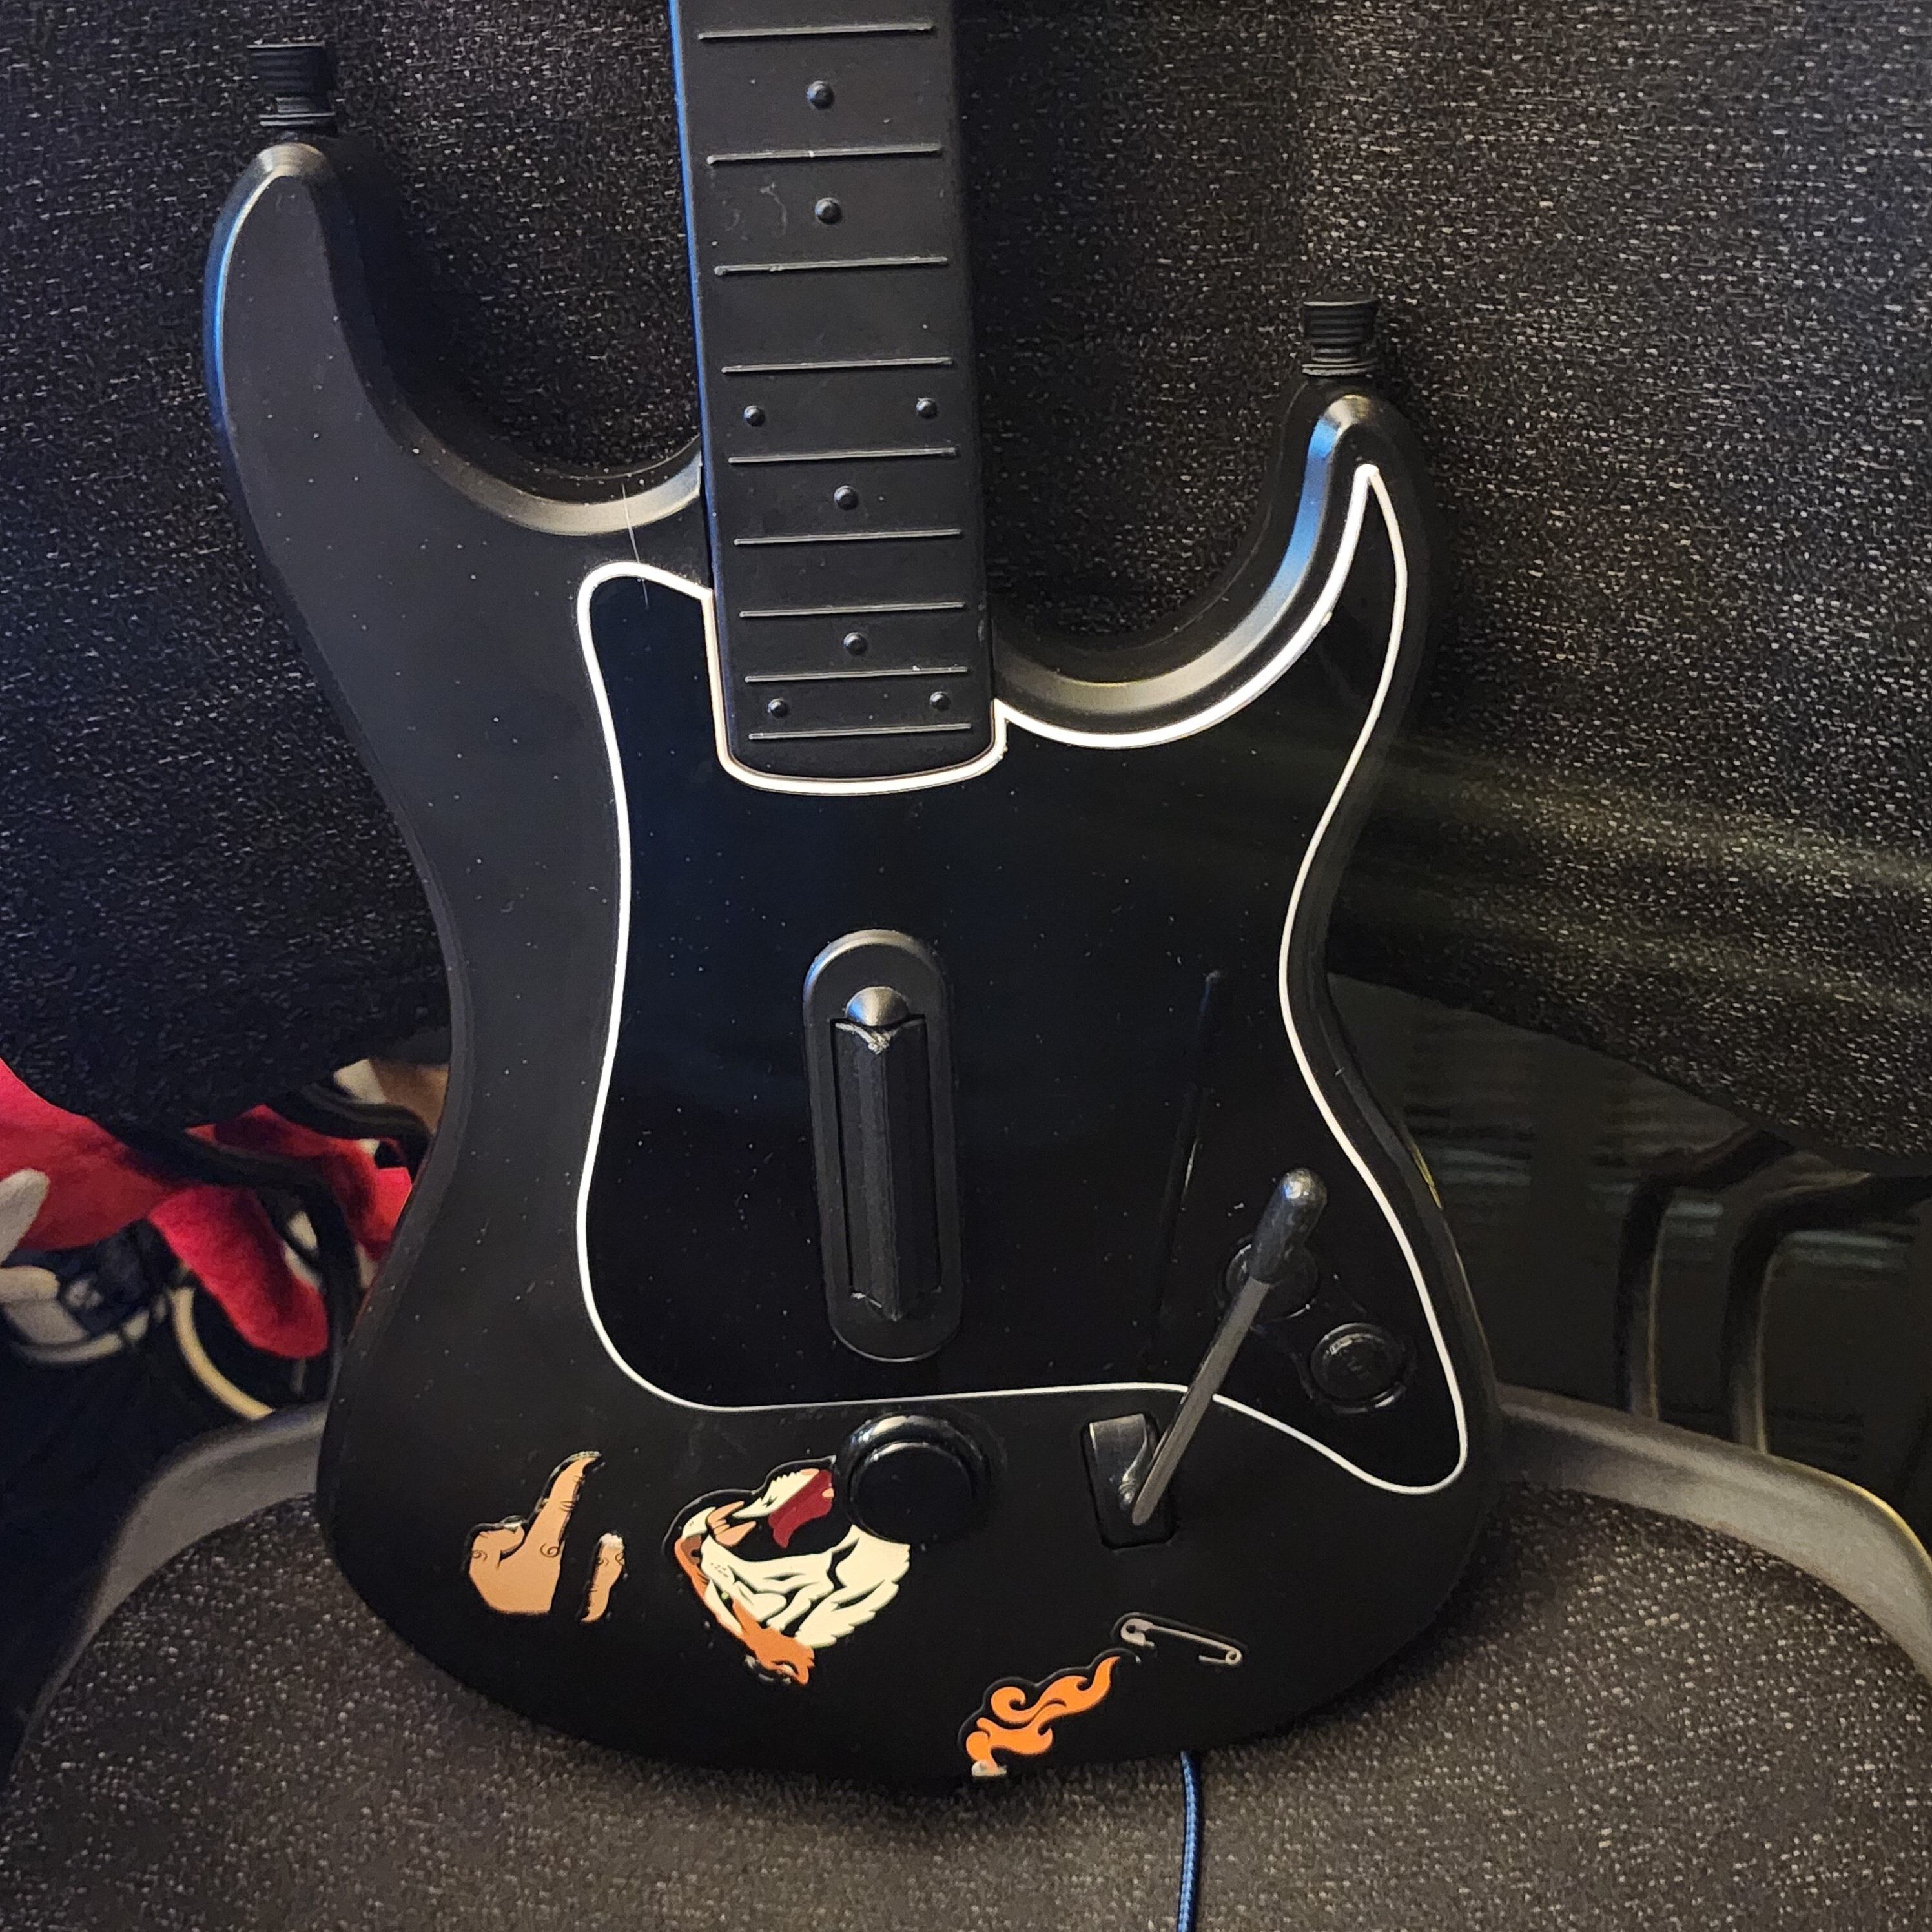 Making some custom guitar hero guitars with Pi Picos : r/raspberry_pi